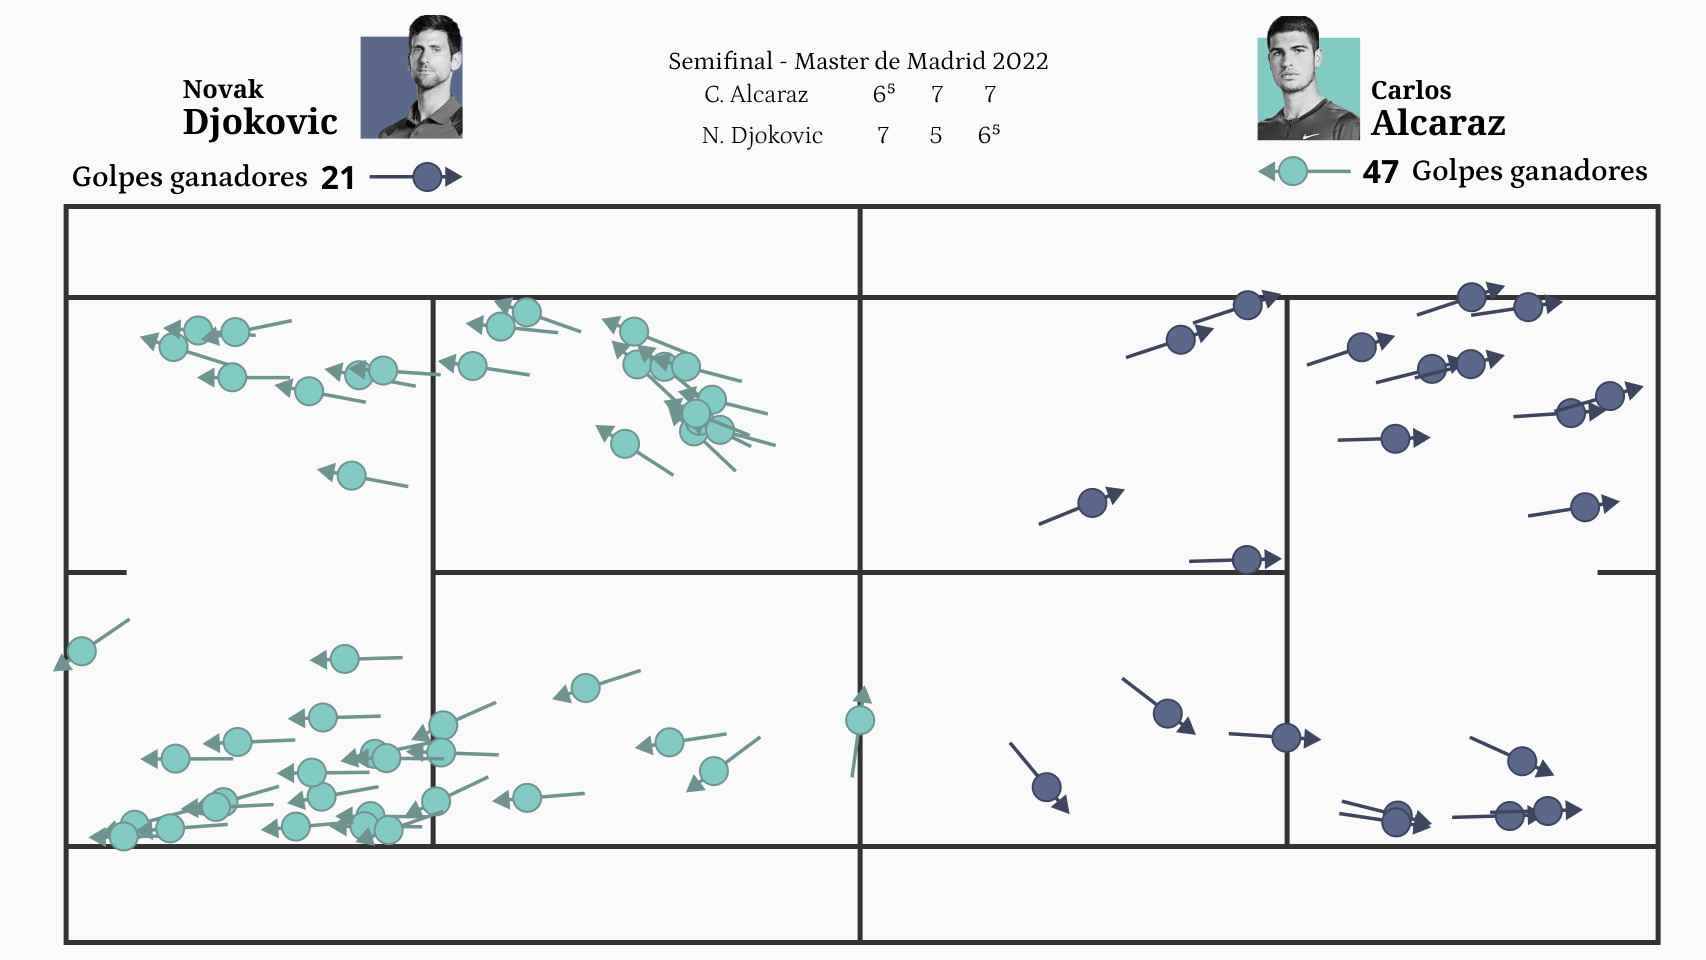 Comparación winners Djokovic vs. Alcaraz (Mutua Madrid Open 2022)